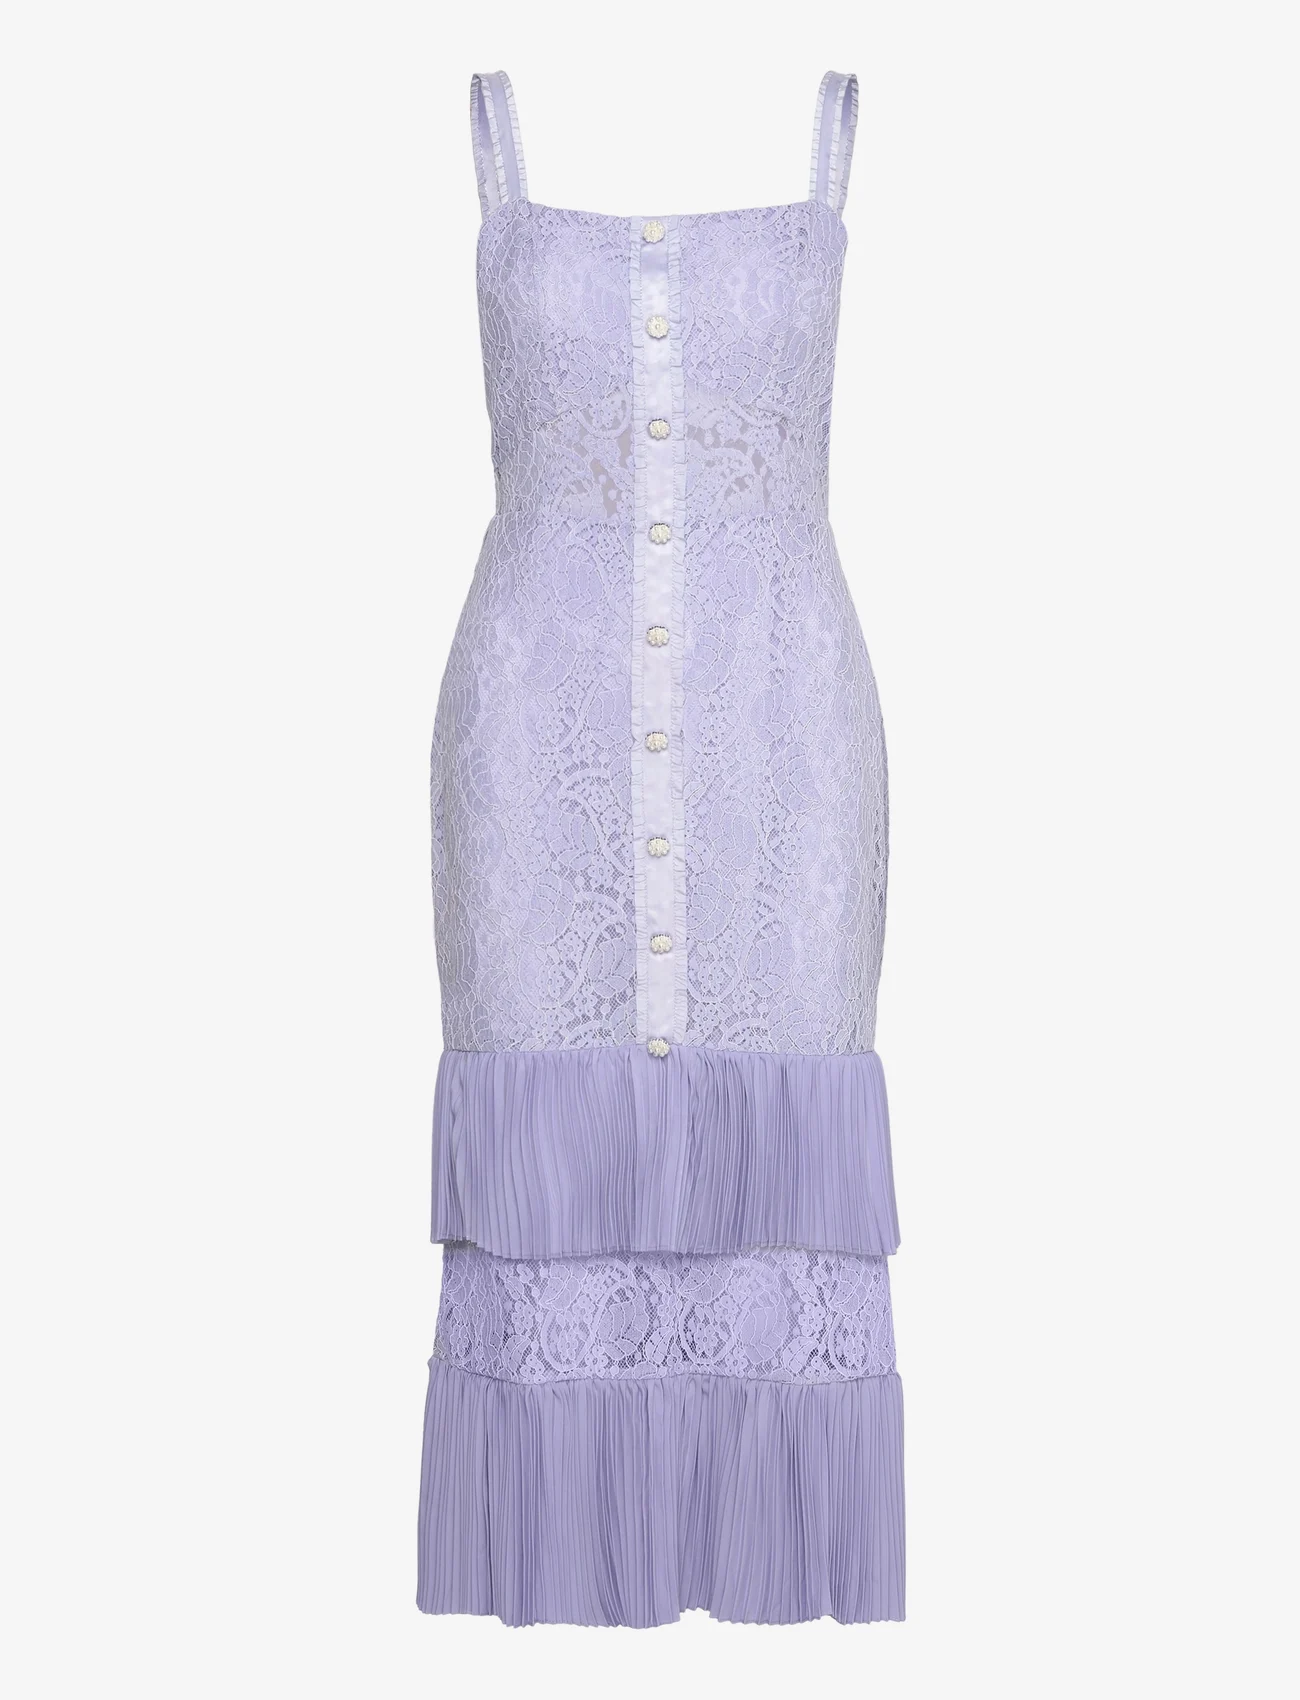 Love Lolita - Juniper dress - feestelijke kleding voor outlet-prijzen - light blue lace - 0